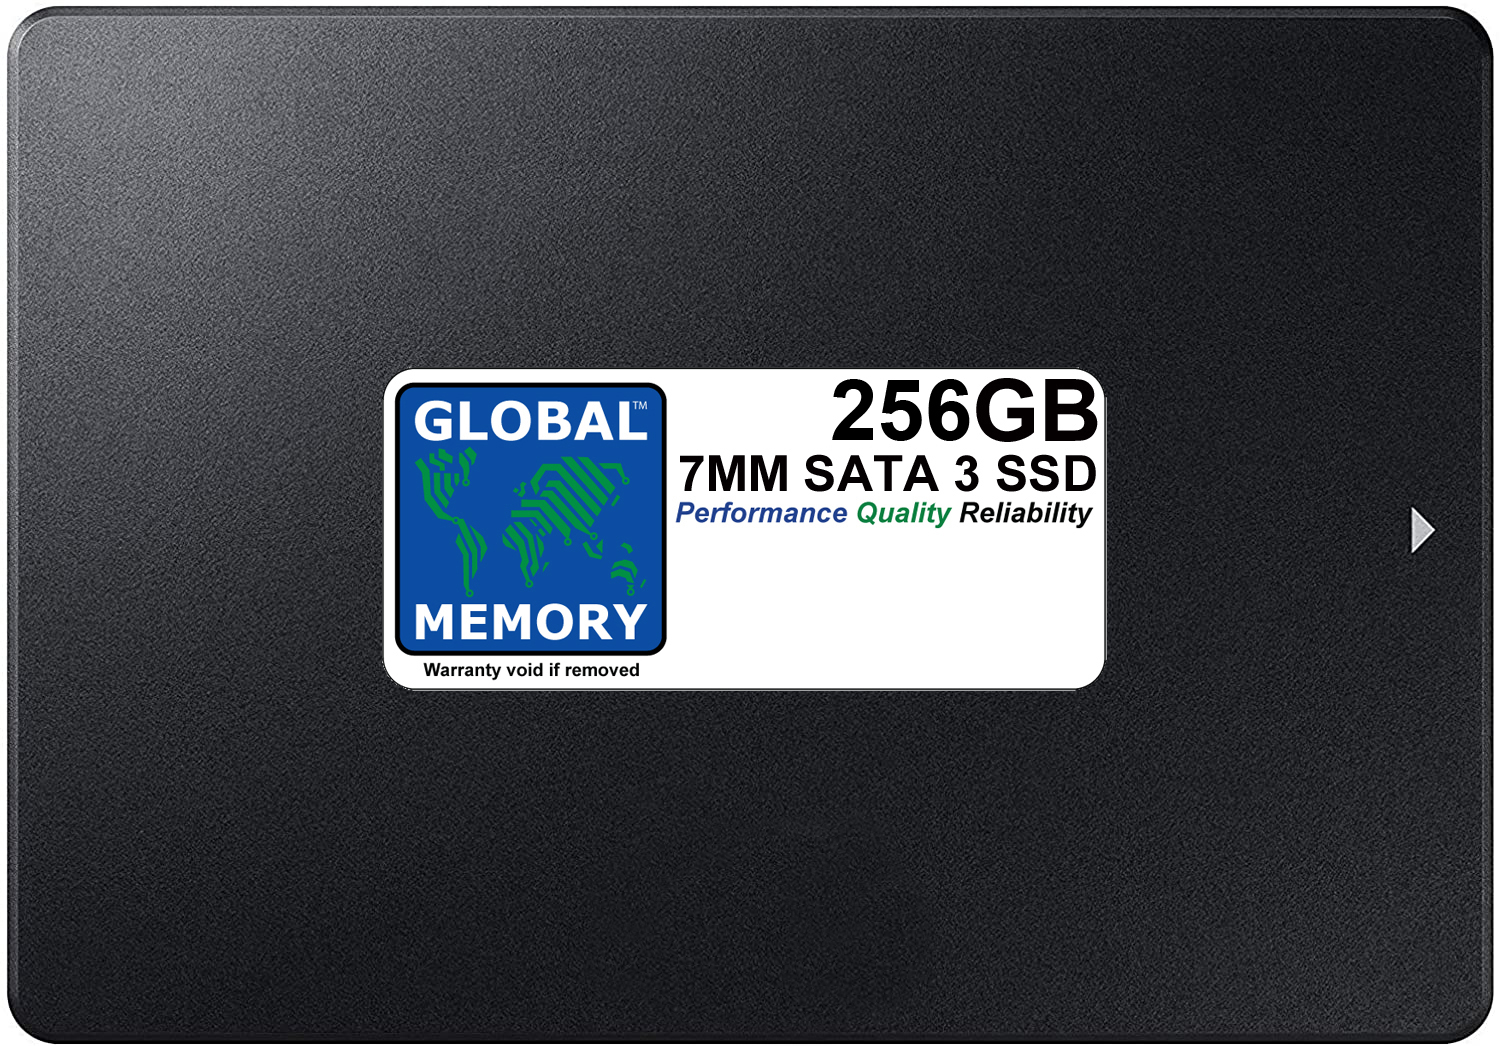 256GB 7mm 2.5" SATA 3 SSD FOR LAPTOPS / DESKTOP PCs / SERVERS / WORKSTATIONS - Click Image to Close